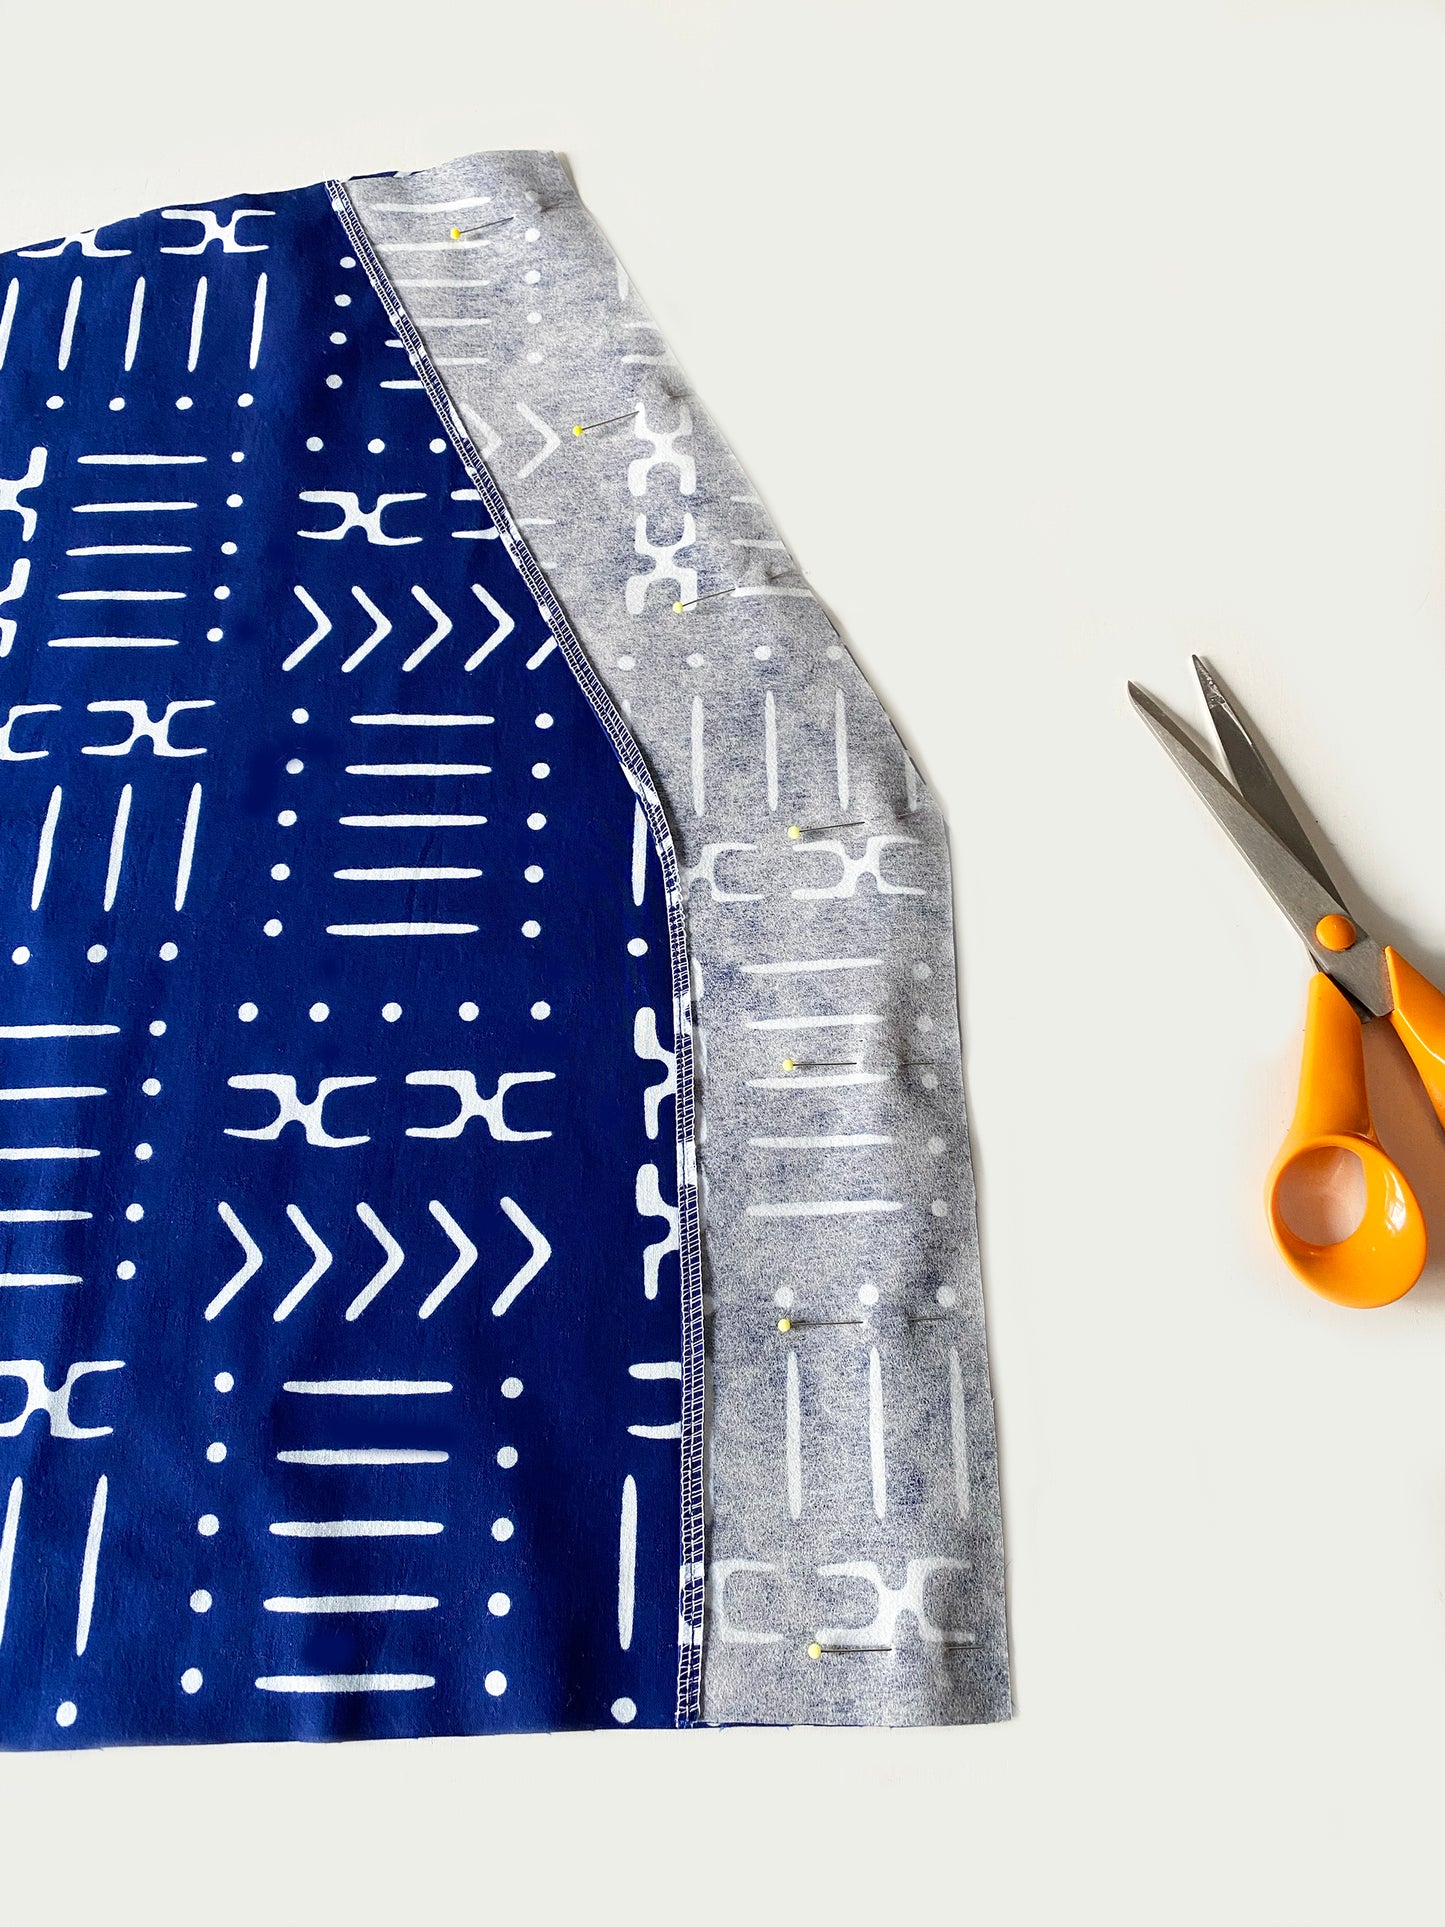 BEATRICE dress sewing pattern